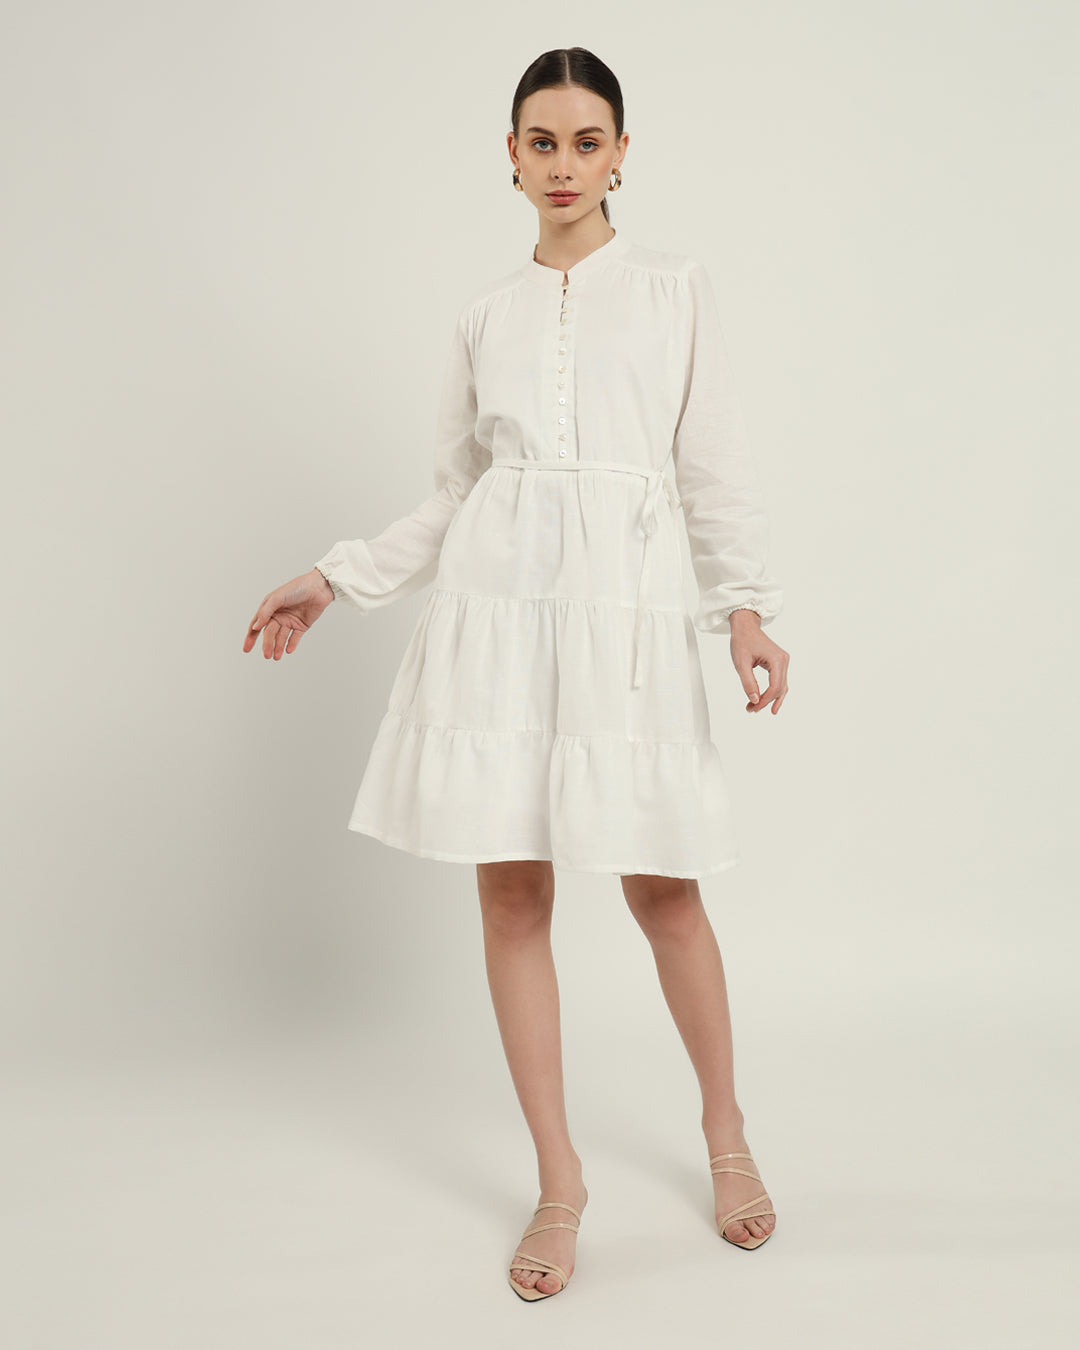 The Ely Daisy White Linen Dress